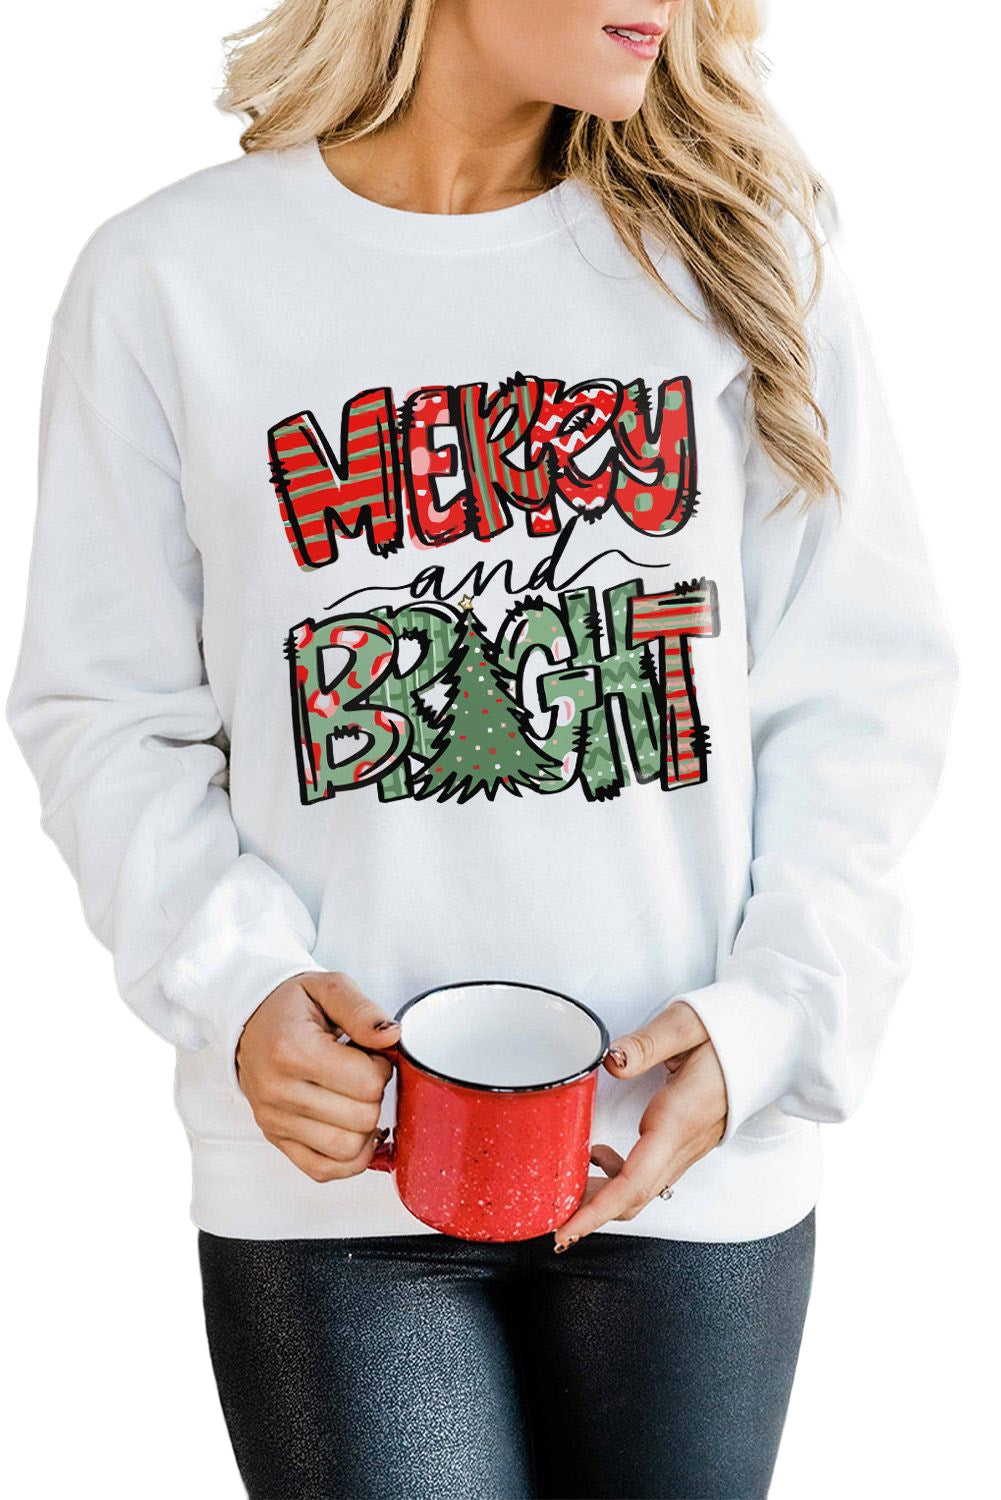 White Merry Bright Christmas Graphic Print Pullover Sweatshirt Graphic Sweatshirts JT's Designer Fashion